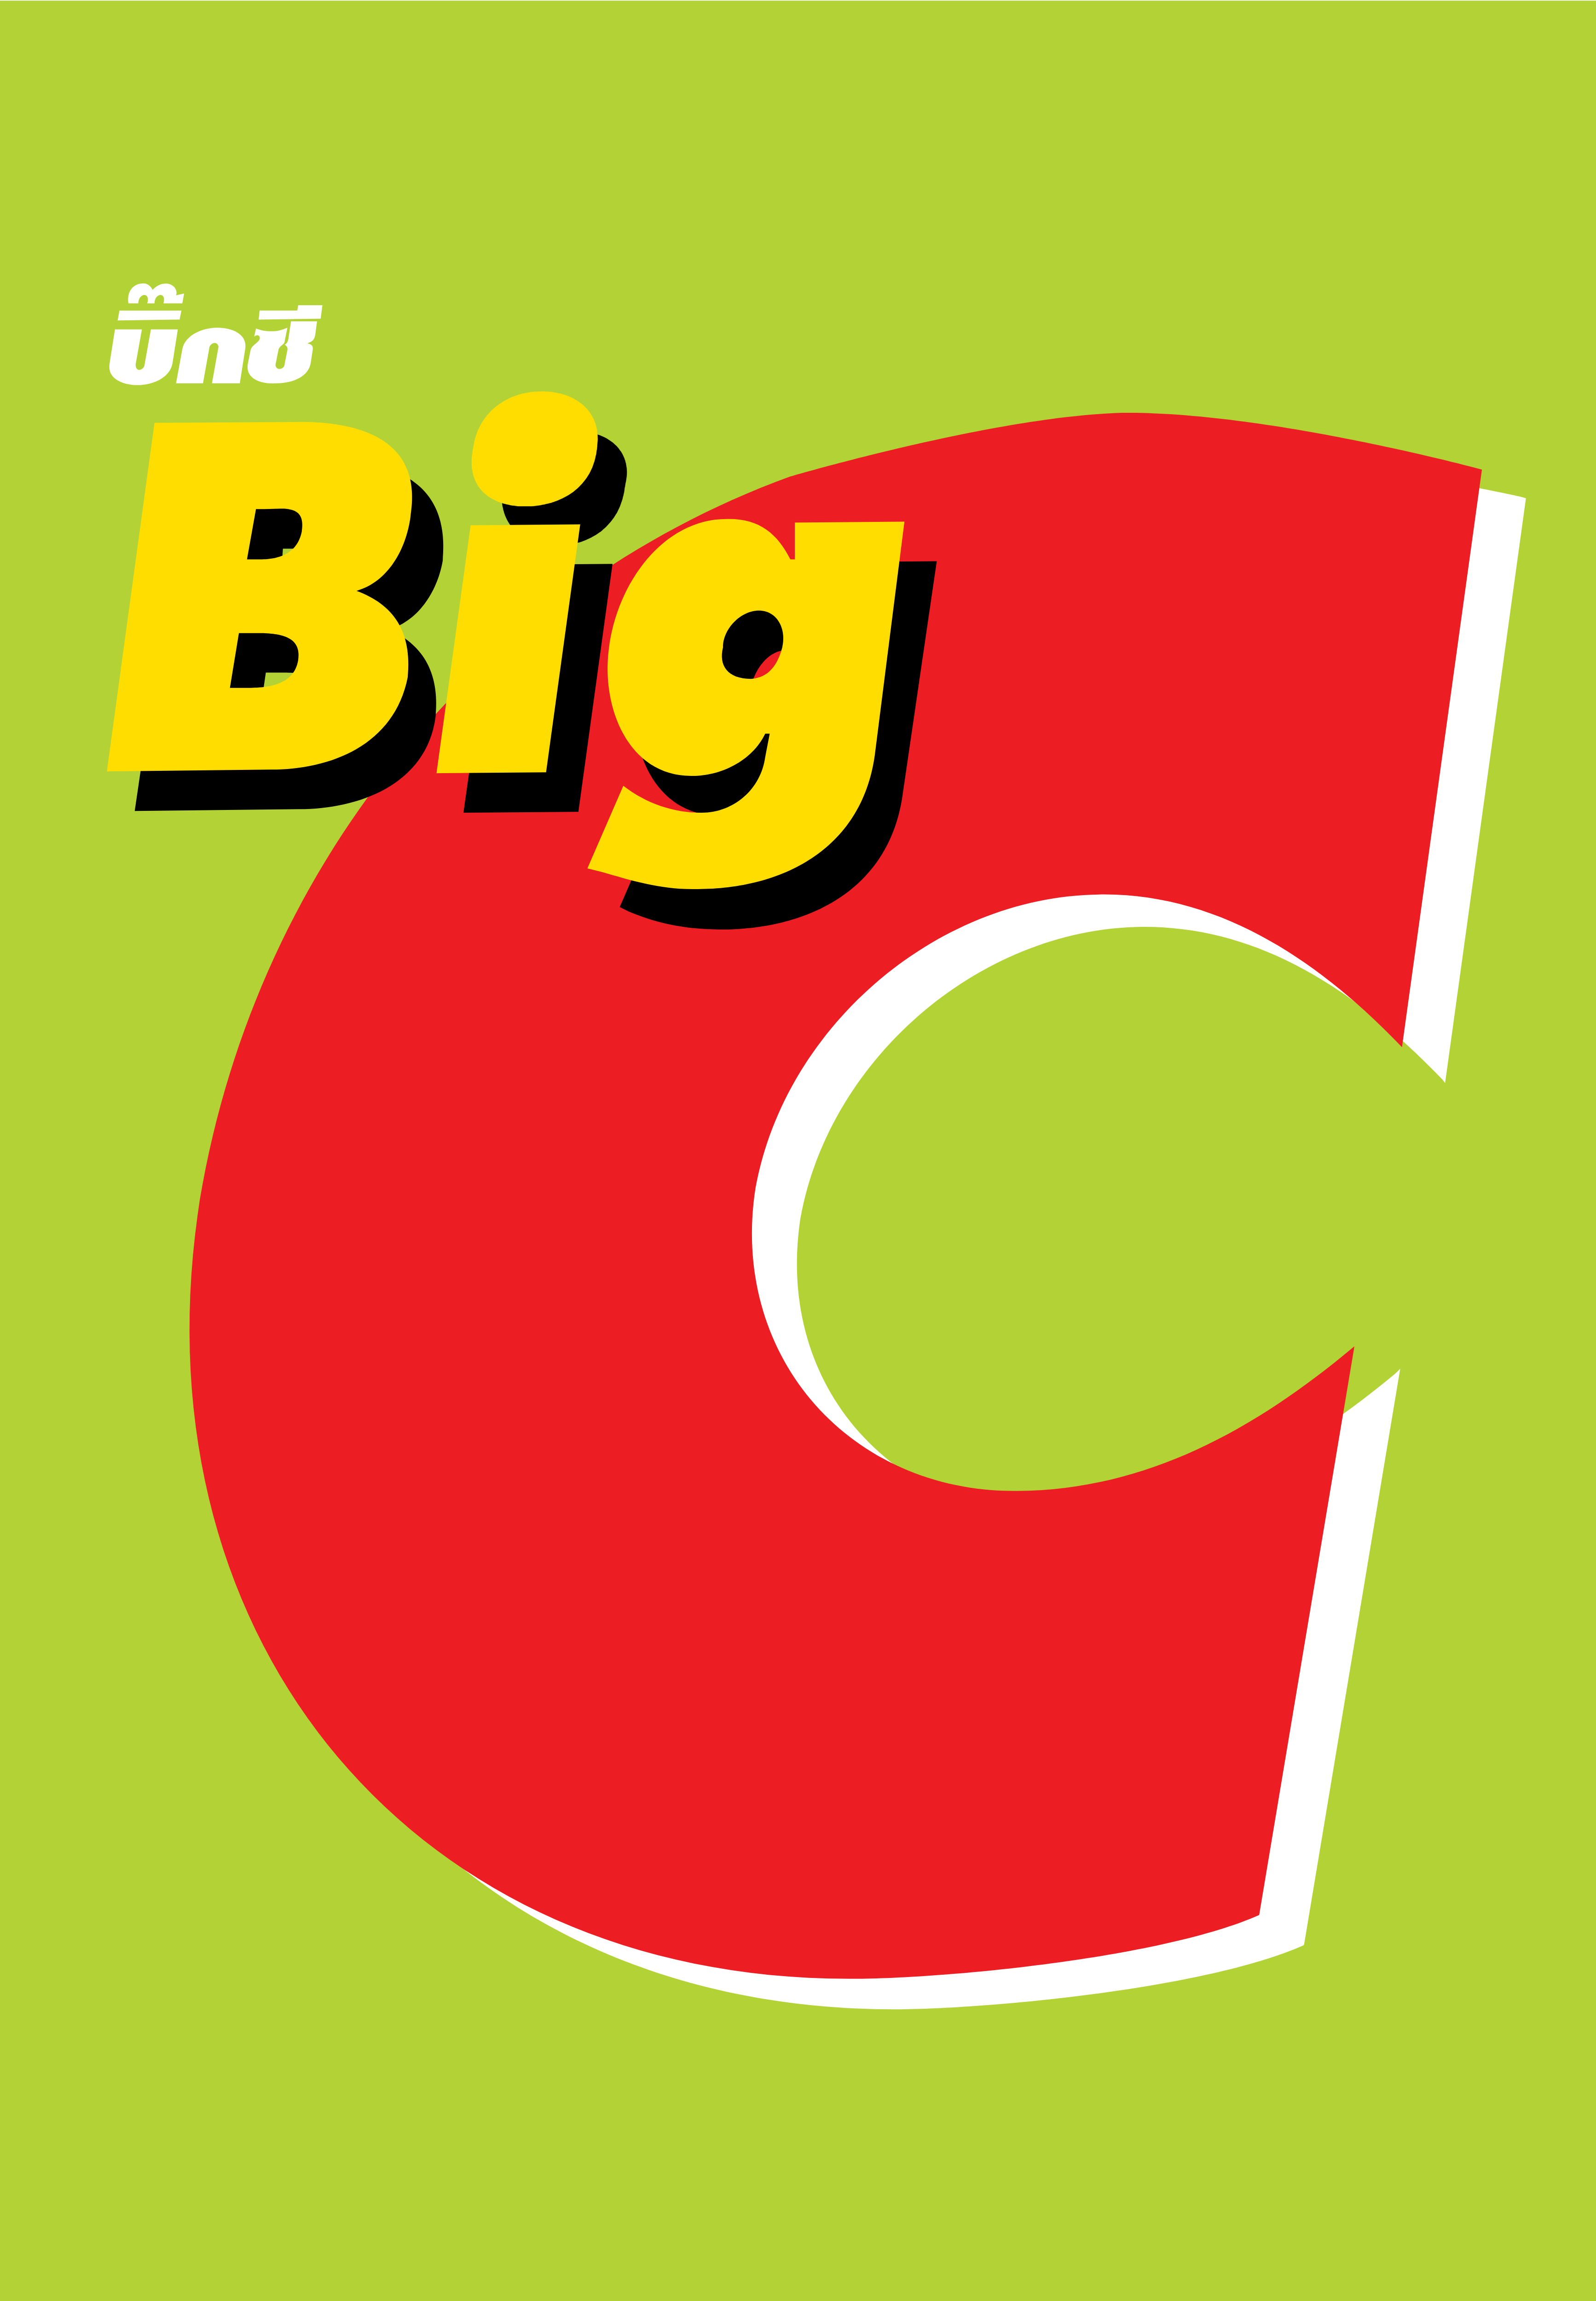 Red and Green C Logo - Big C – Logos Download